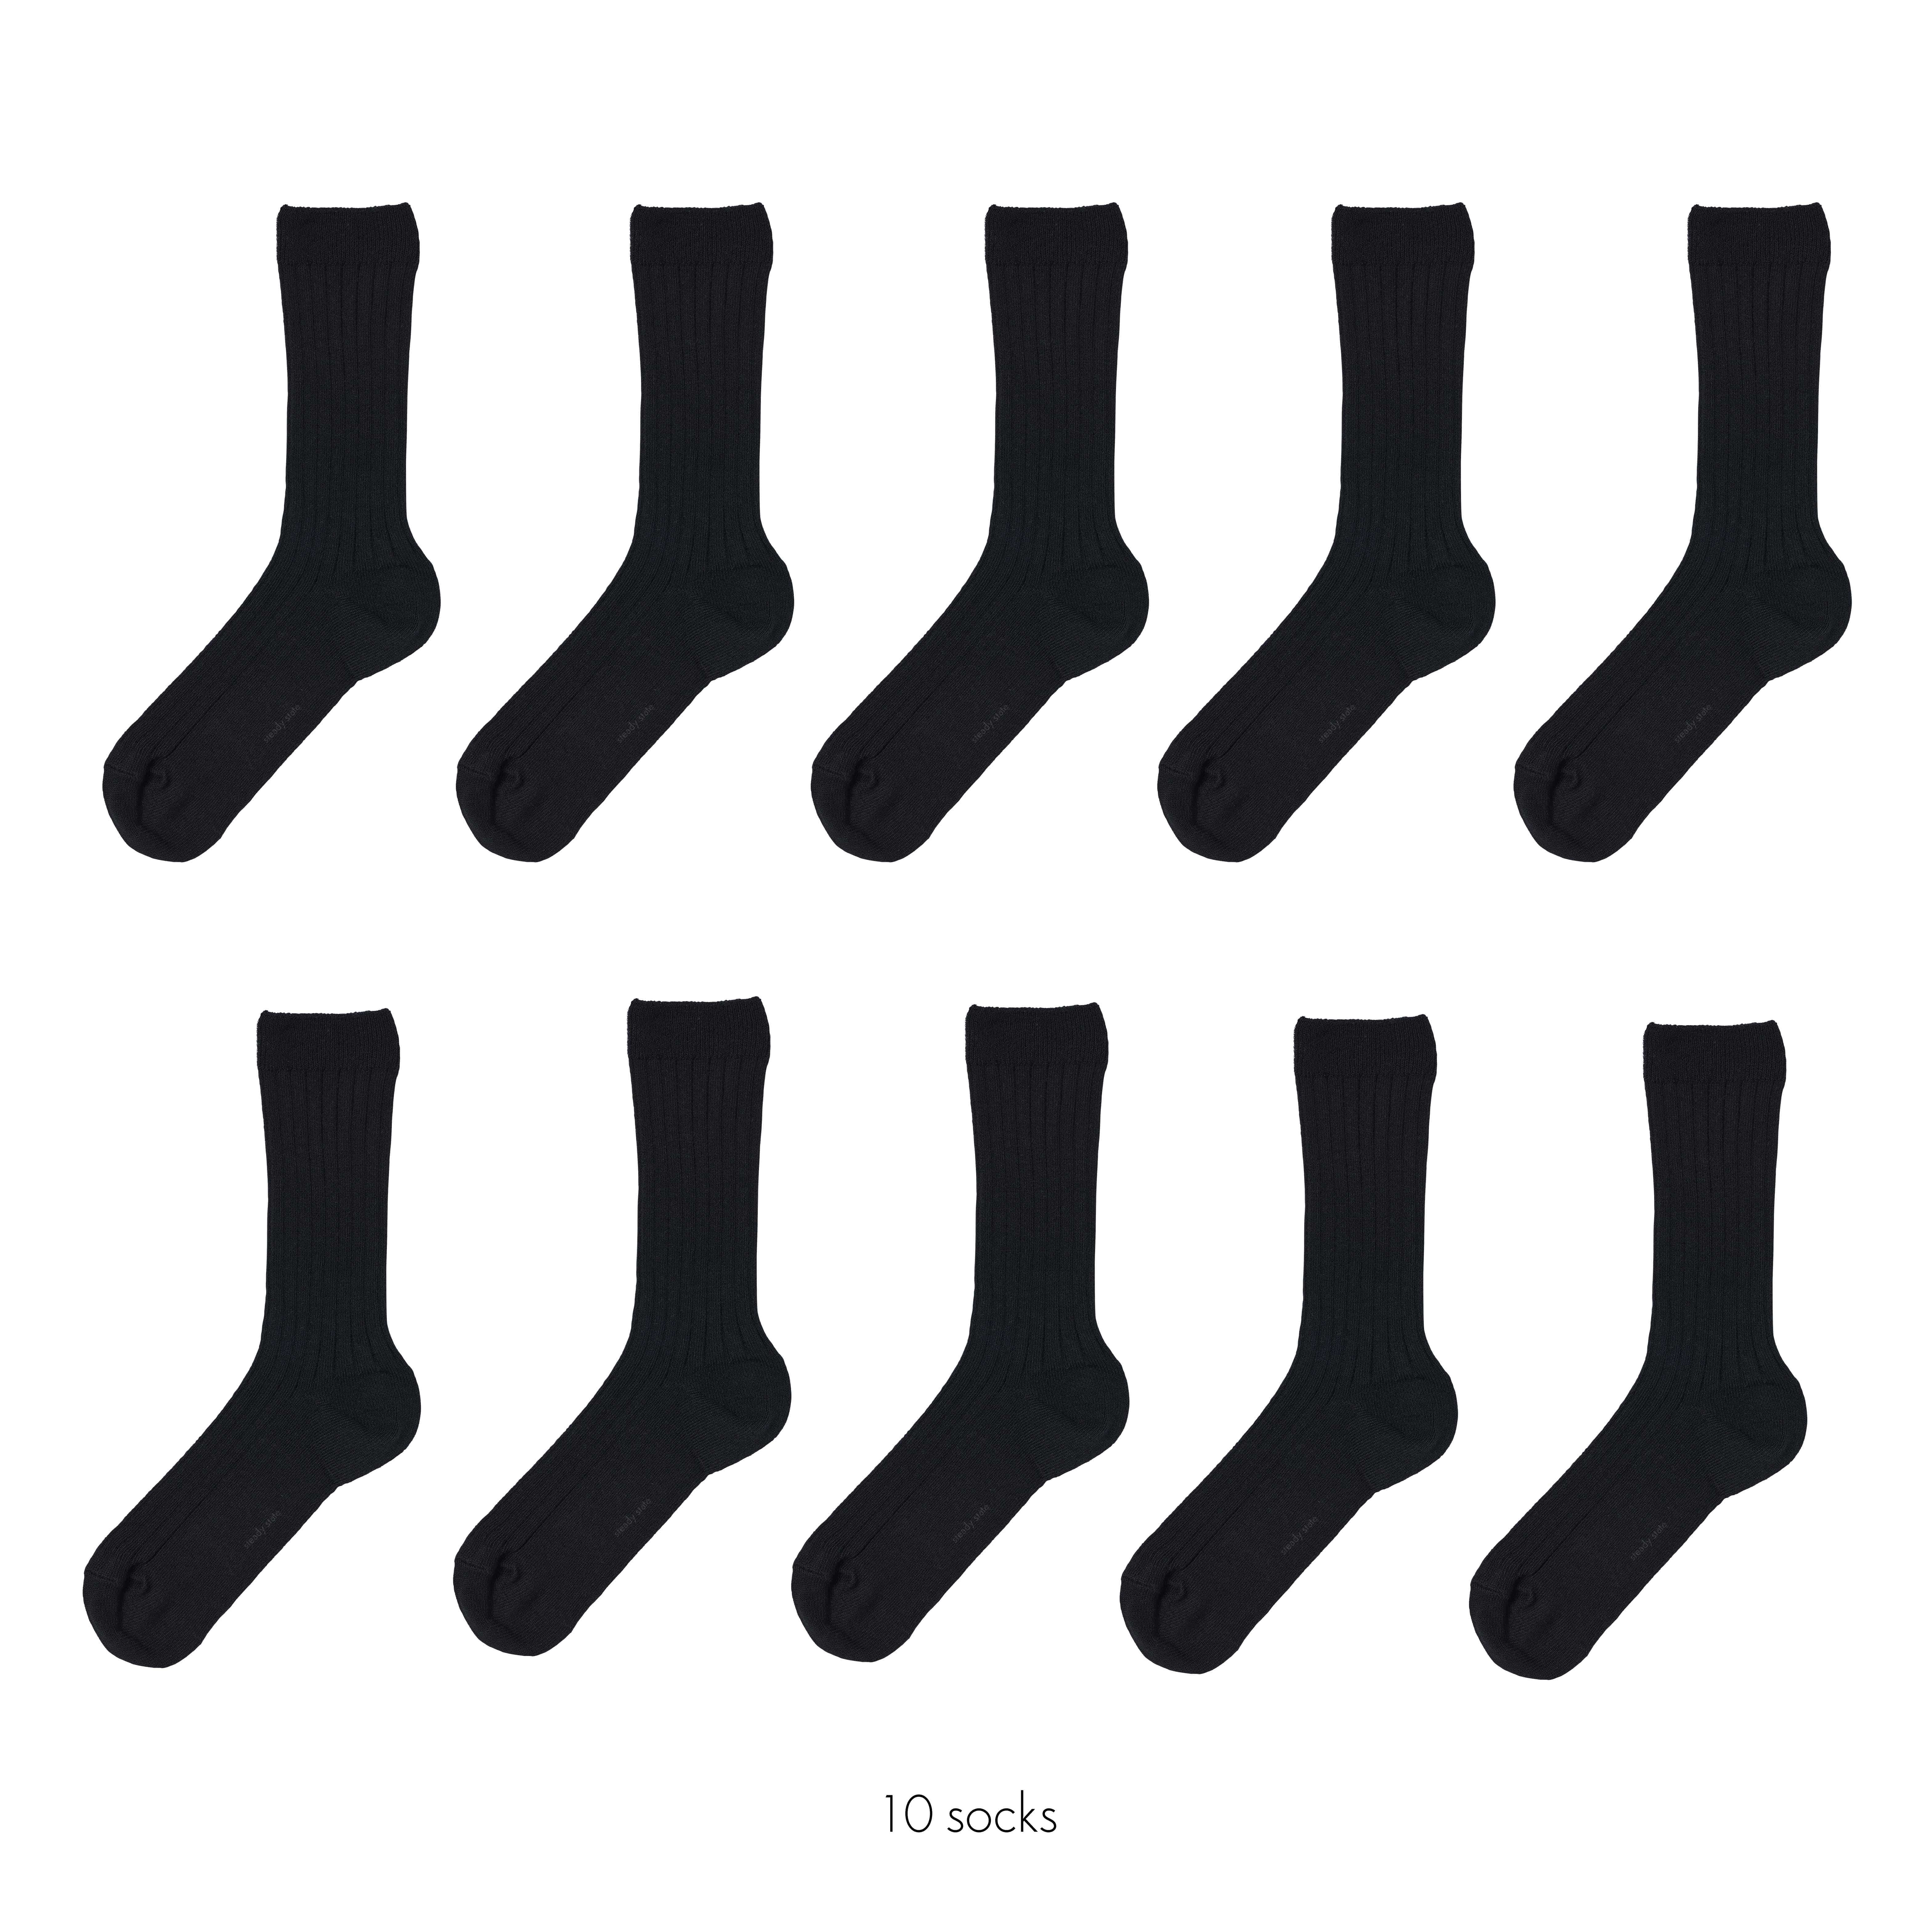 10 Socks Cotton Black Socks